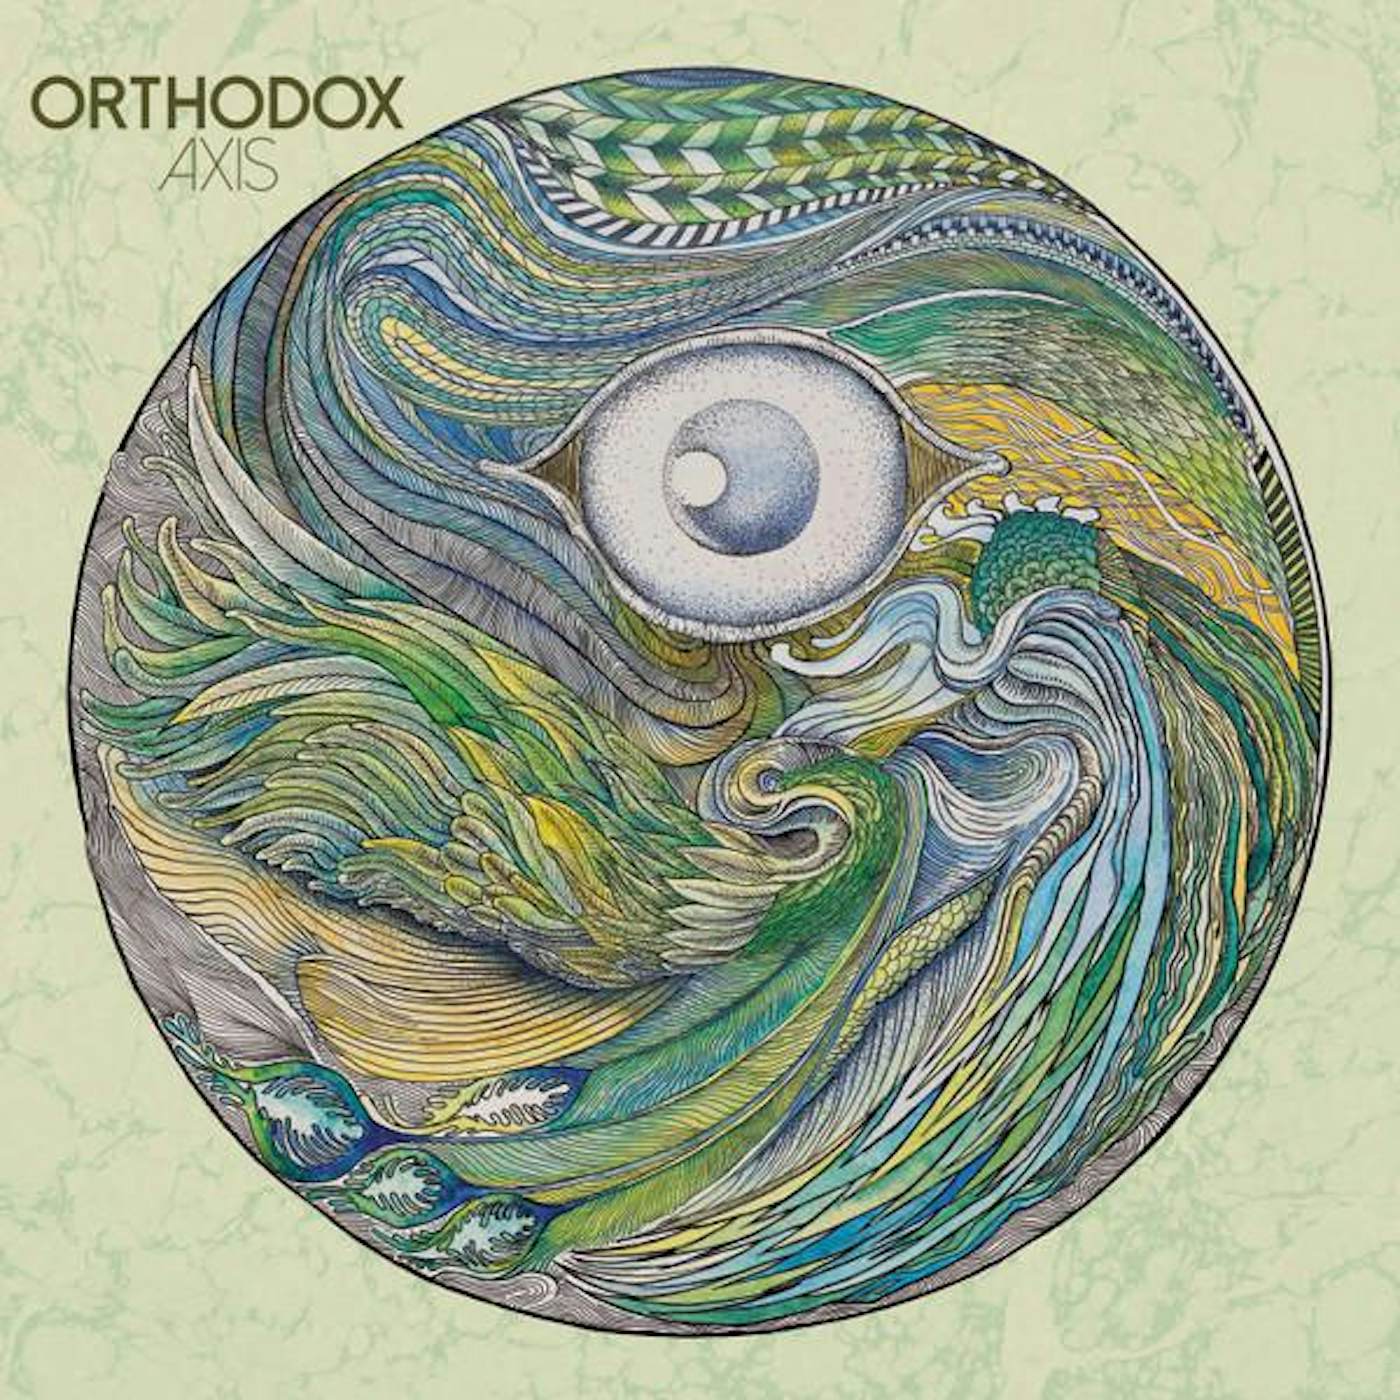 Orthodox AXIS (BLACK) Vinyl Record